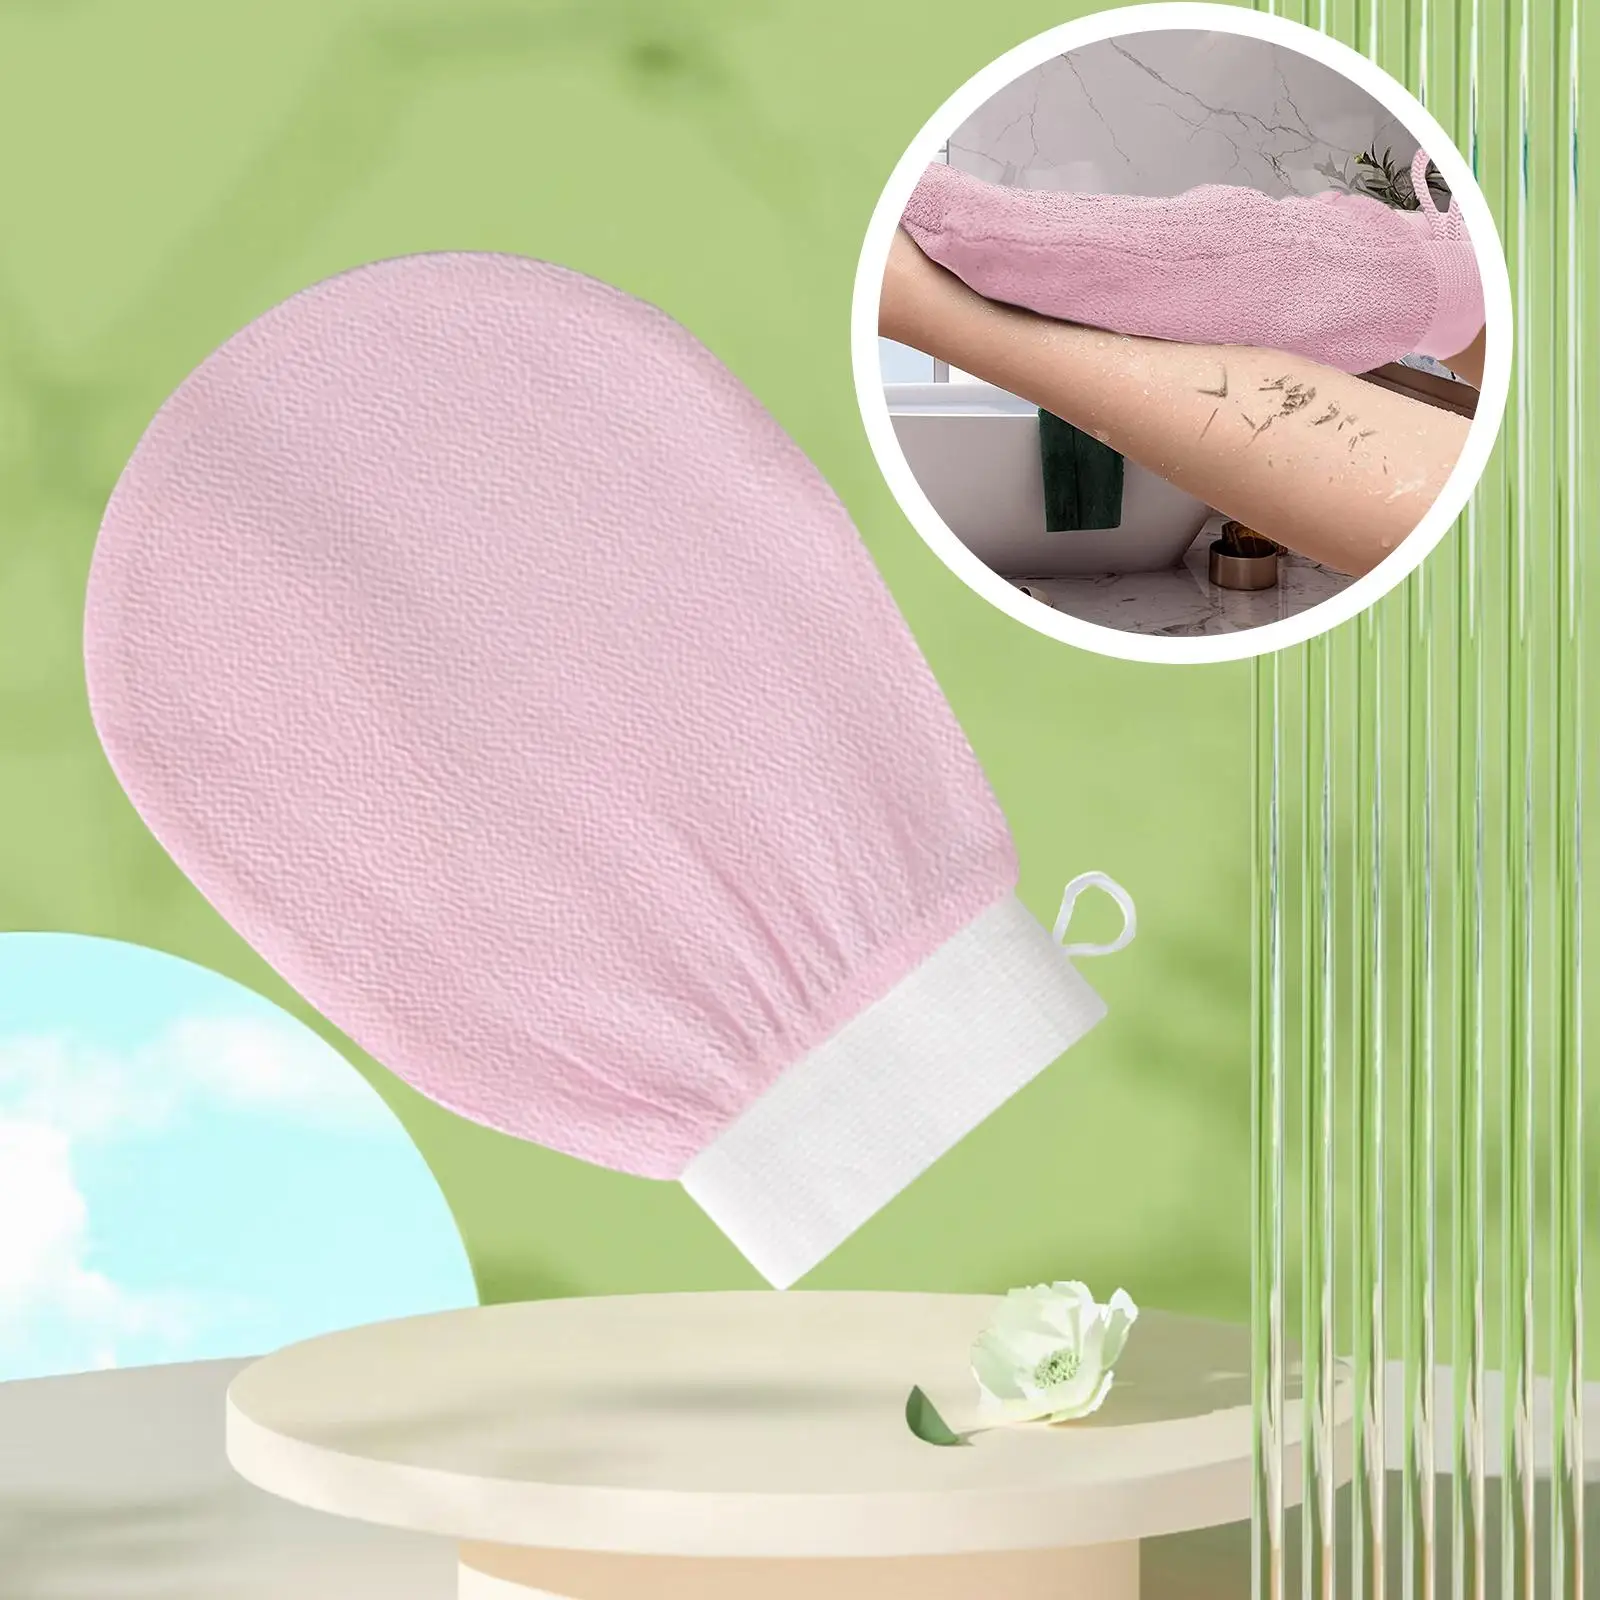 Bath Glove, Multipurpose Double Sided Scrubber Body Scrub for Hand Neck Men Women